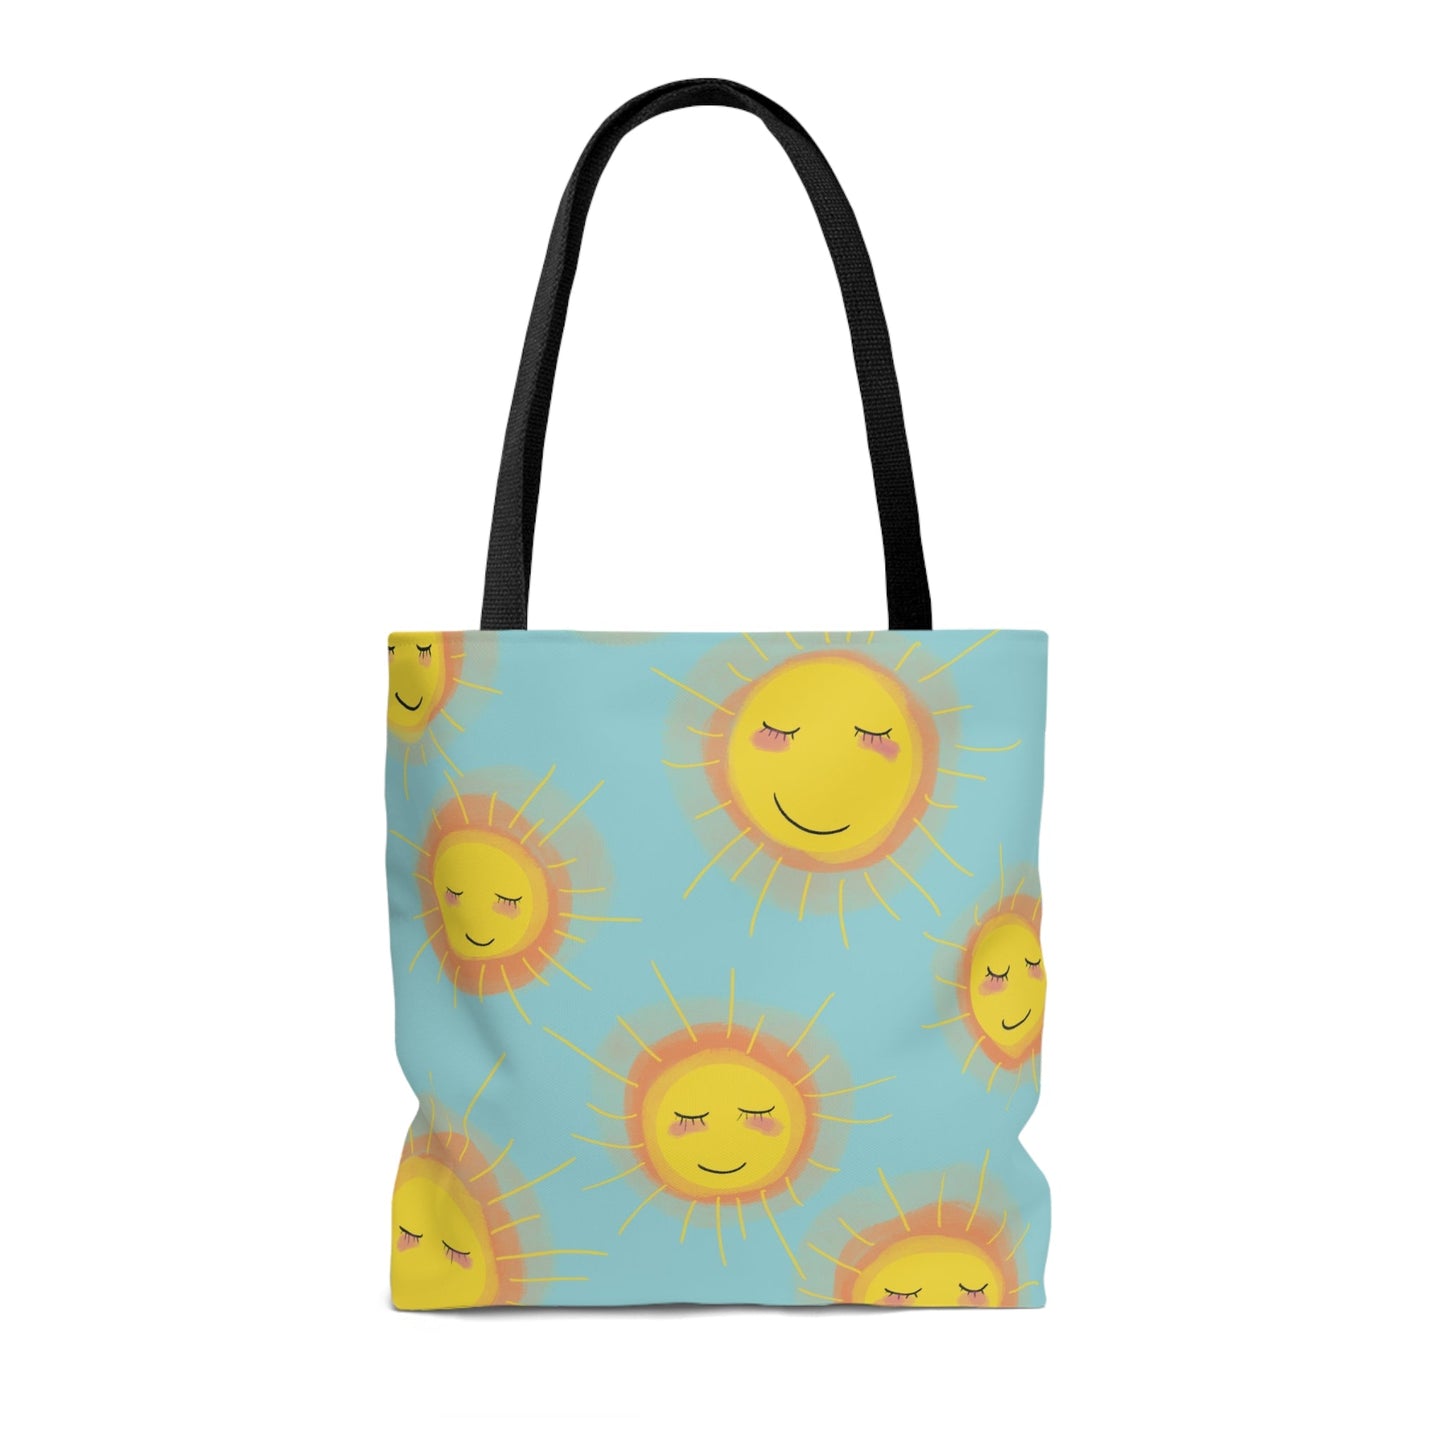 happy sunshine tote bag - The muggin shop